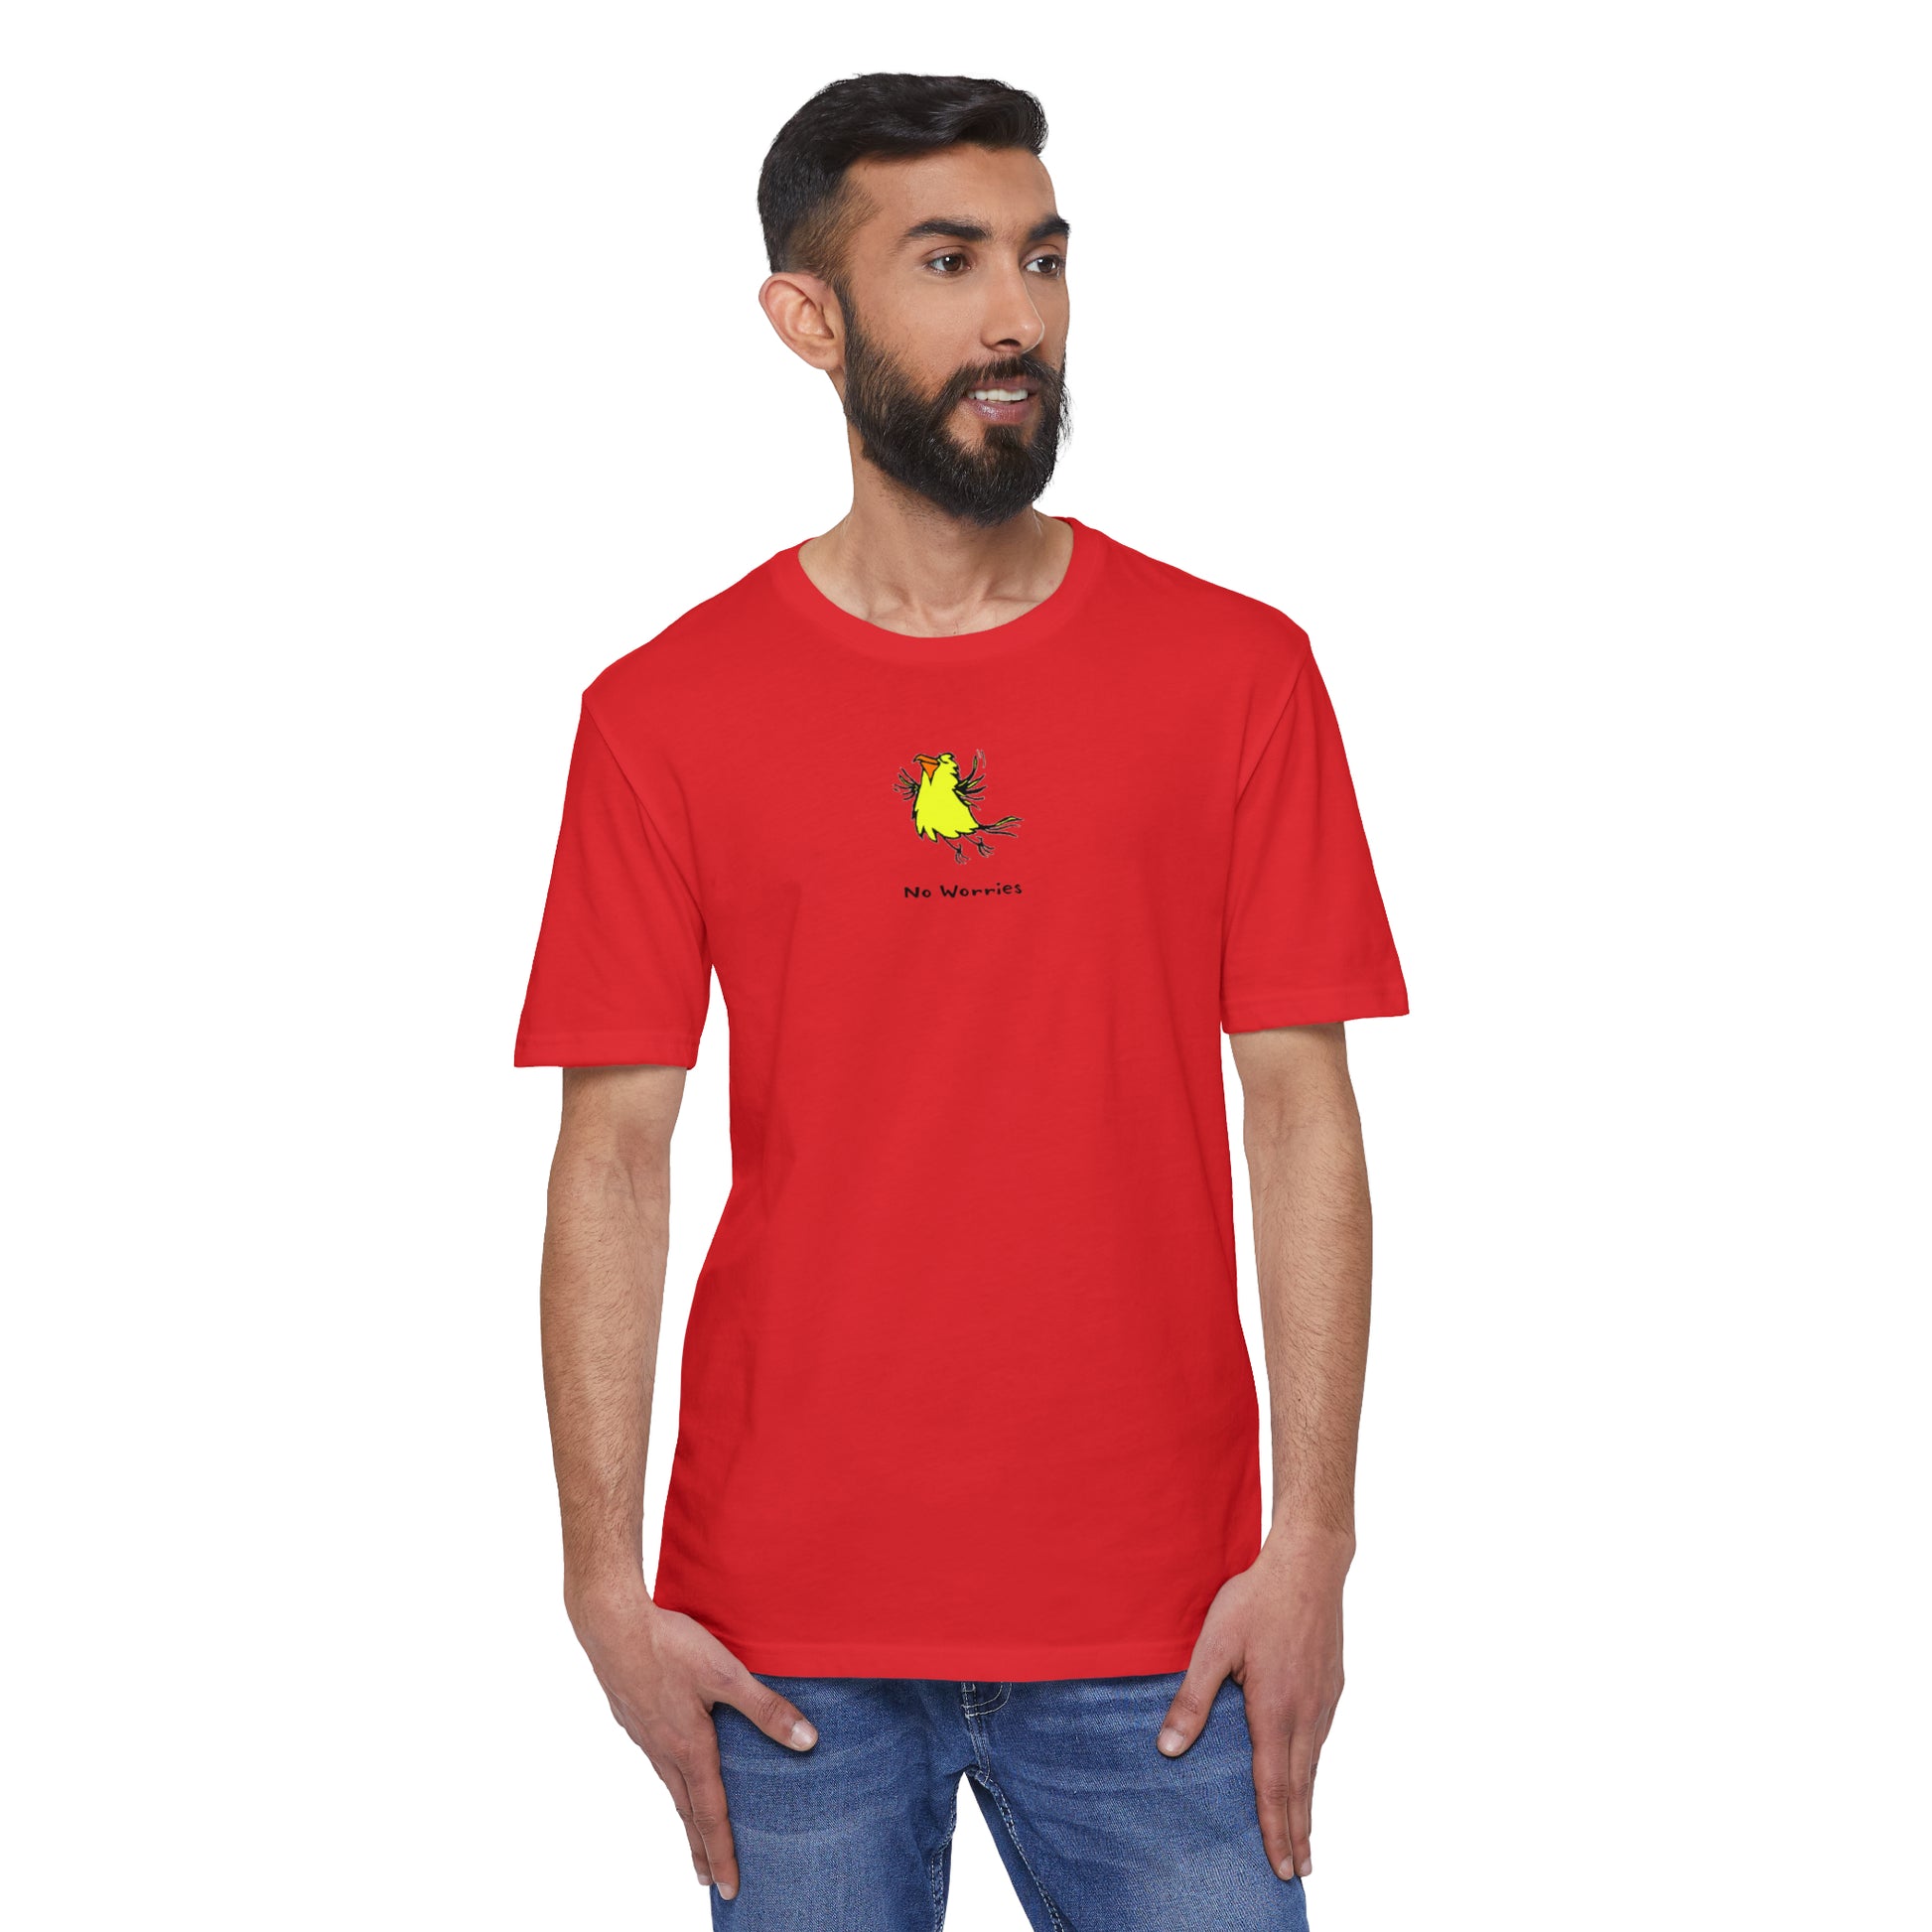 No Worries Bird - Ecofriendly tee shirt.  Small flying yellow joyful bird.